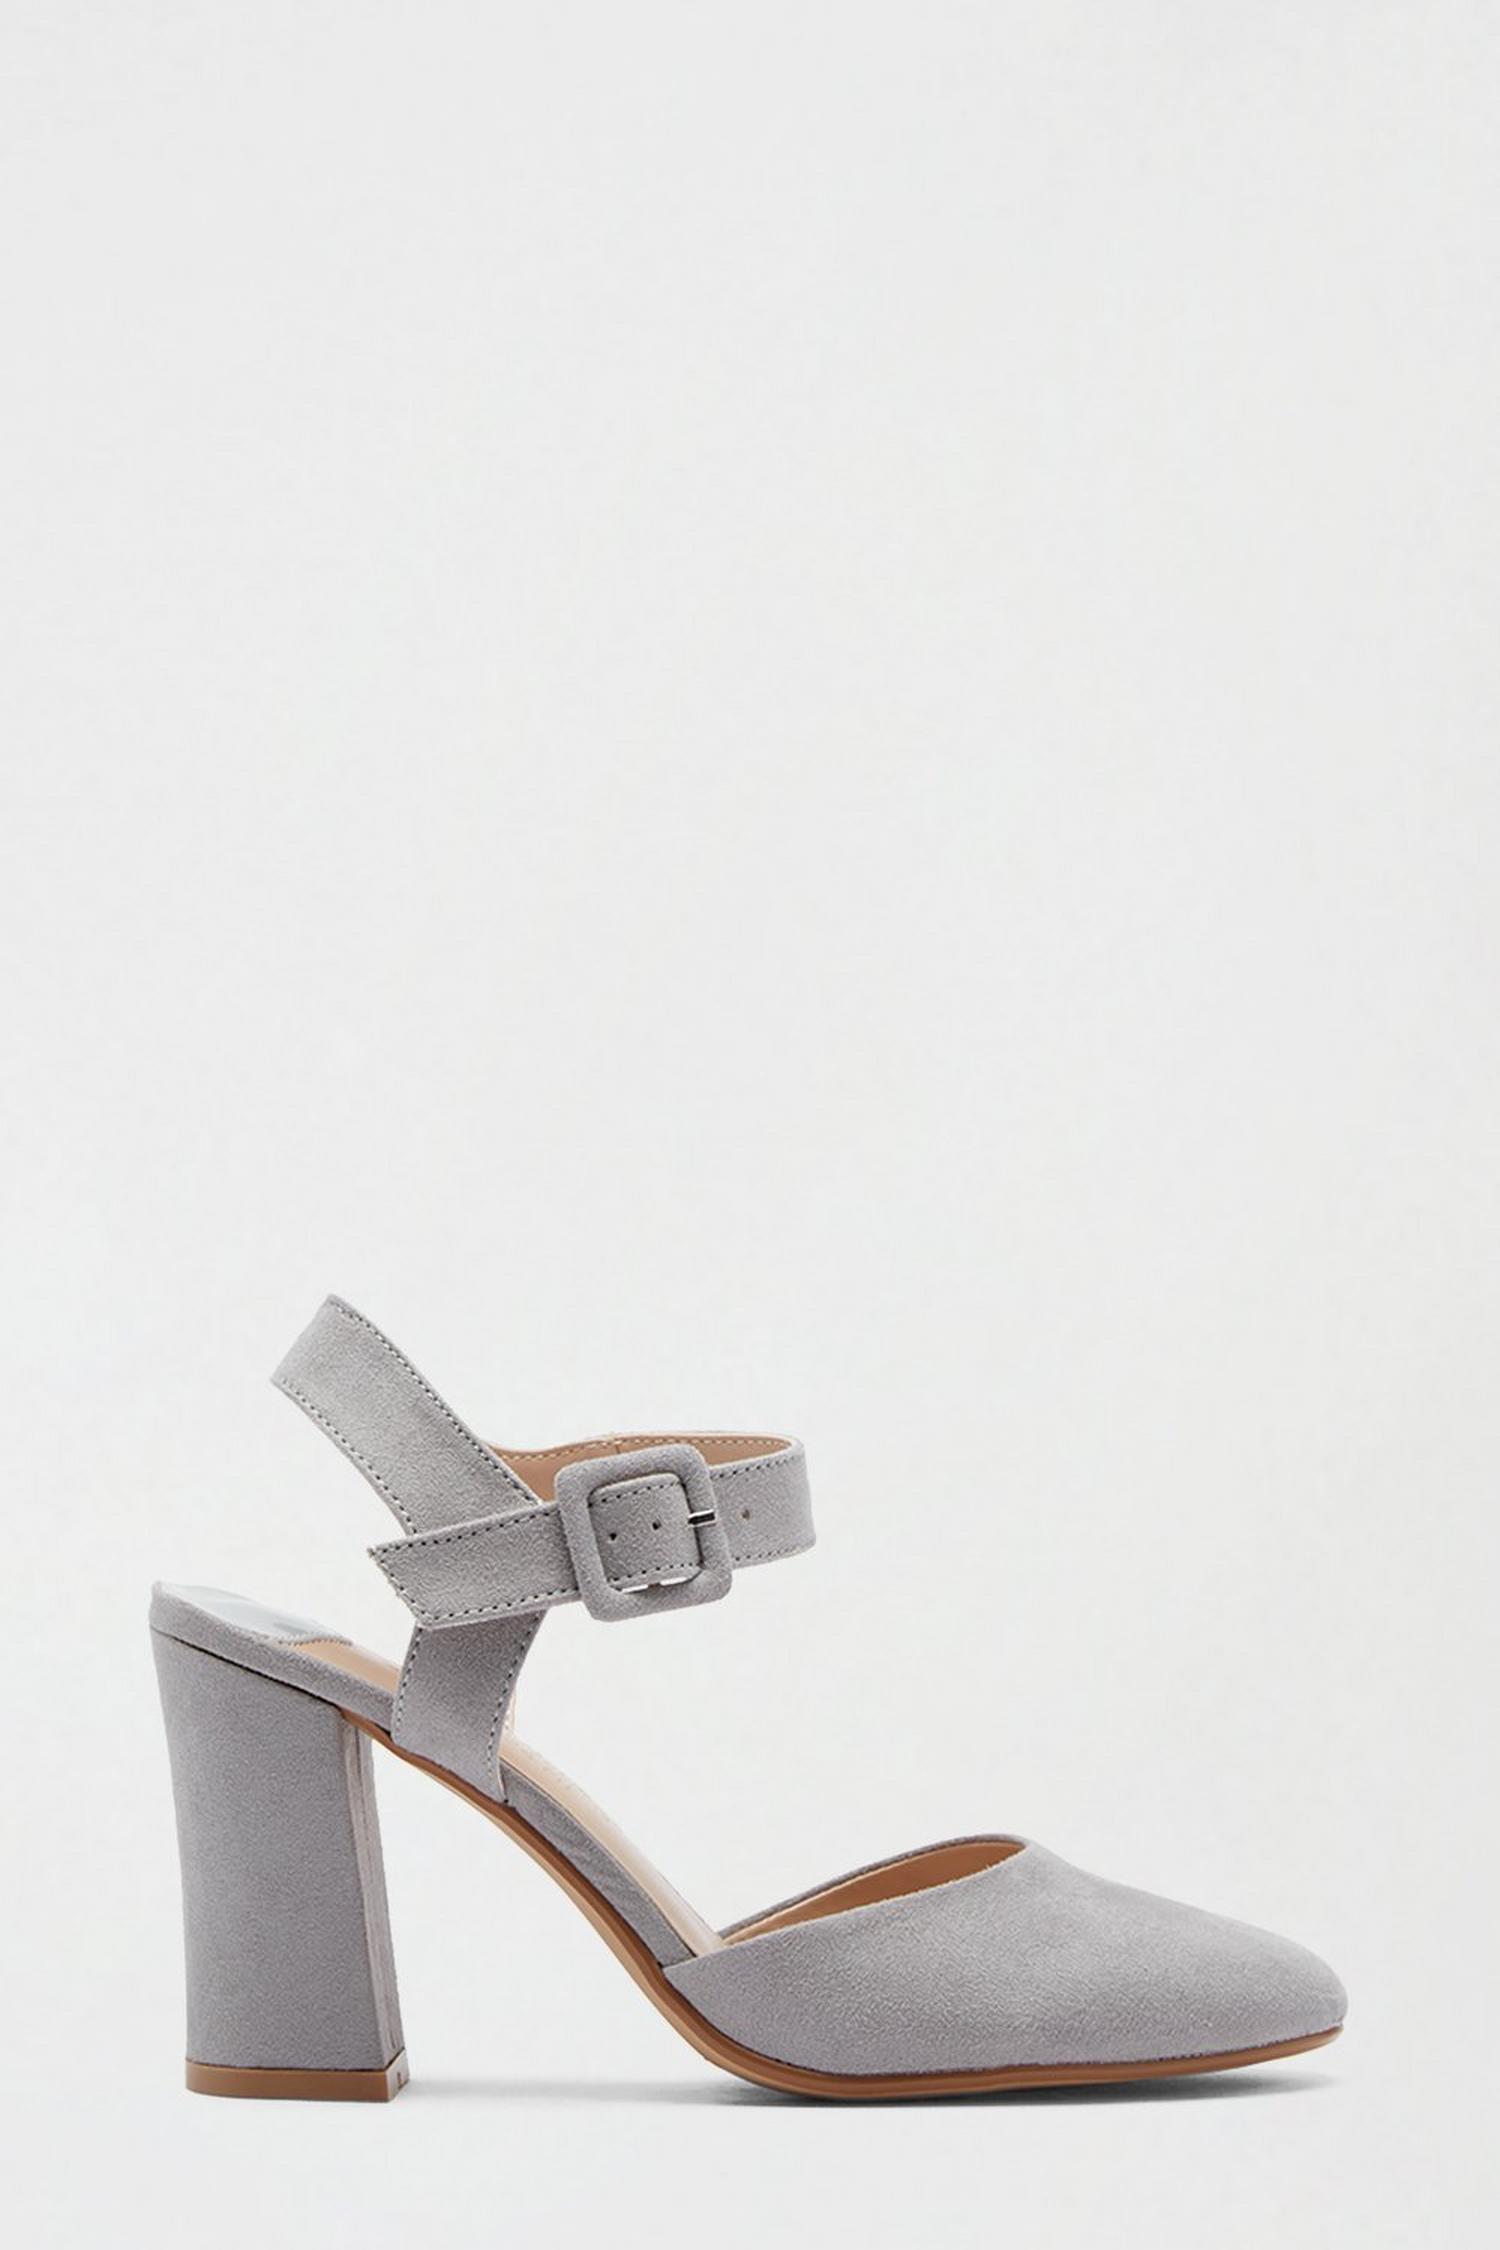 Wide Fit Grey Date Court Shoe | Dorothy Perkins UK